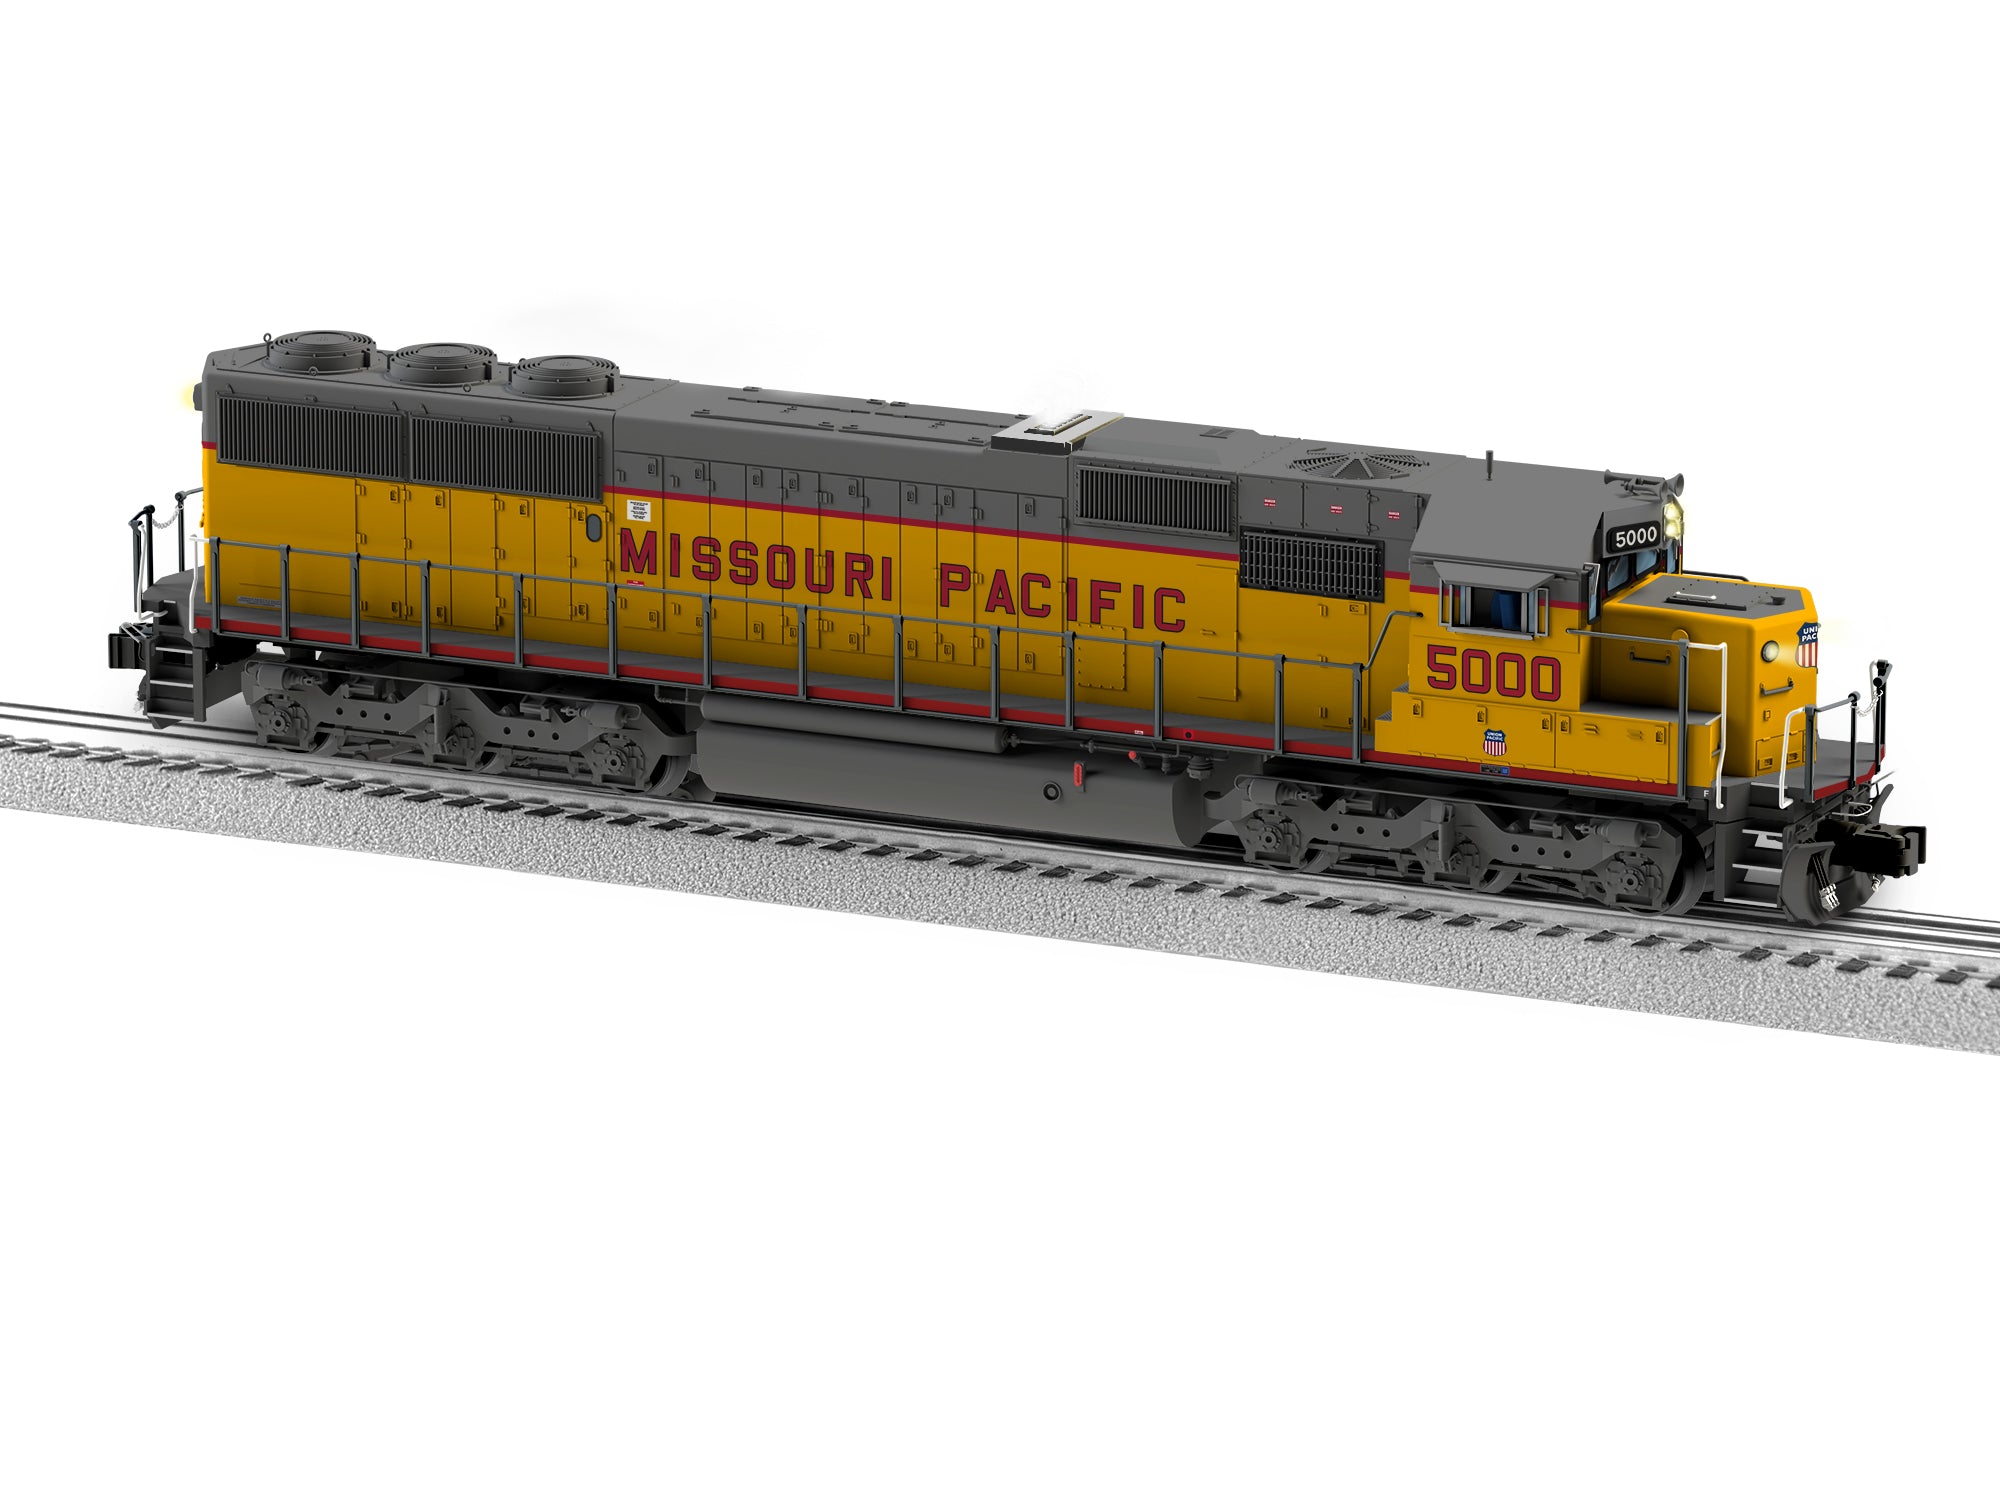 Lionel 2433271 - Legacy SD50 Diesel Engine "Missouri Pacific" #5000